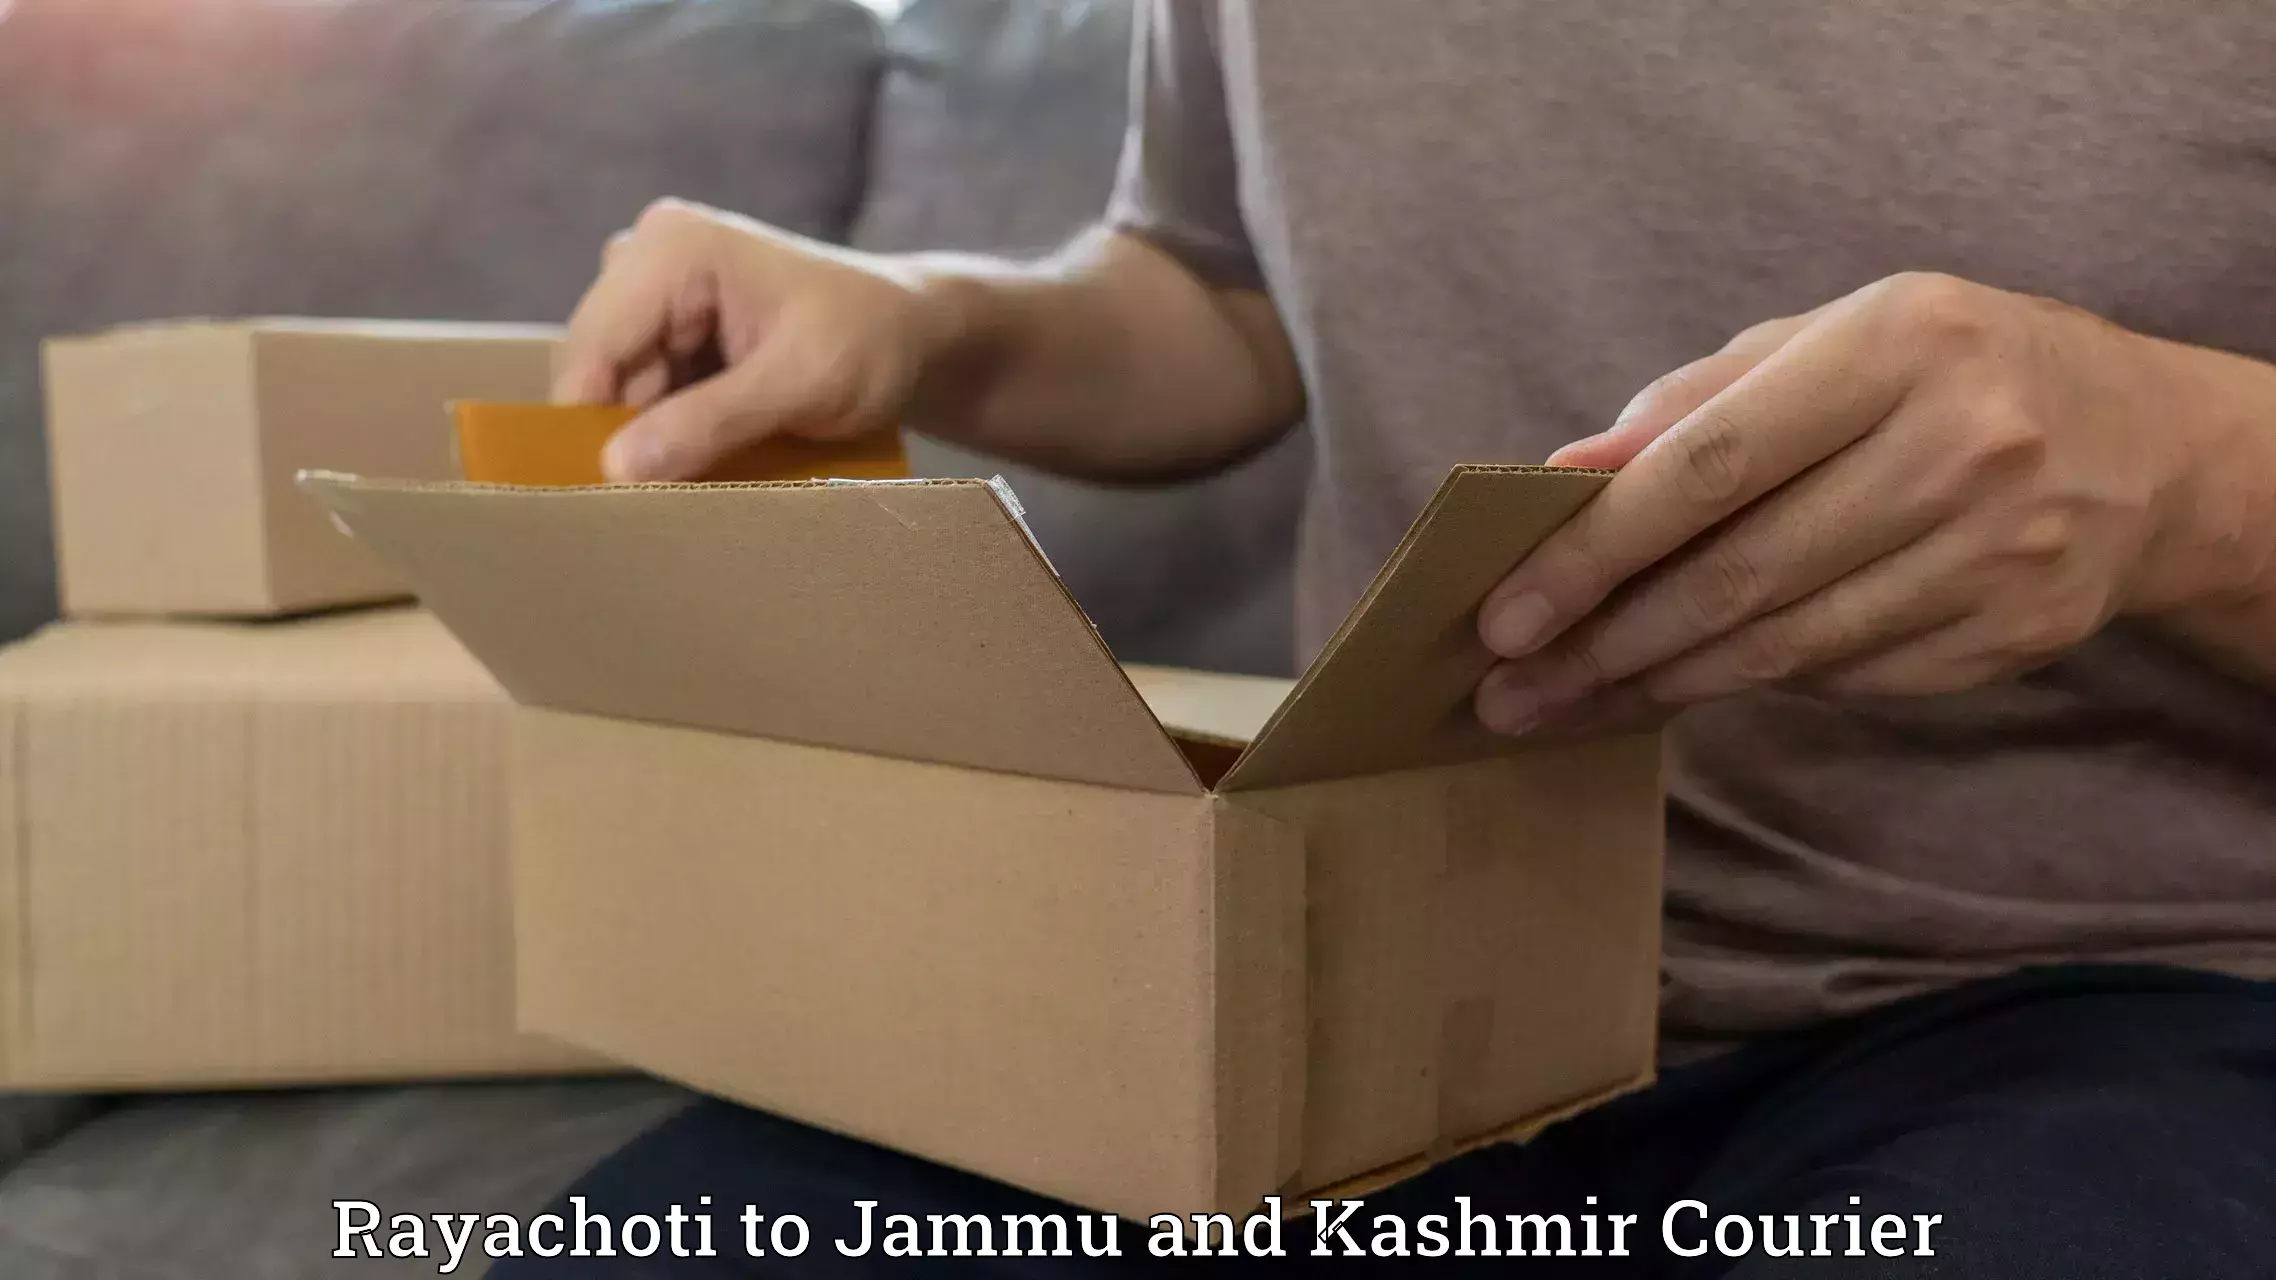 Courier service efficiency Rayachoti to Jammu and Kashmir